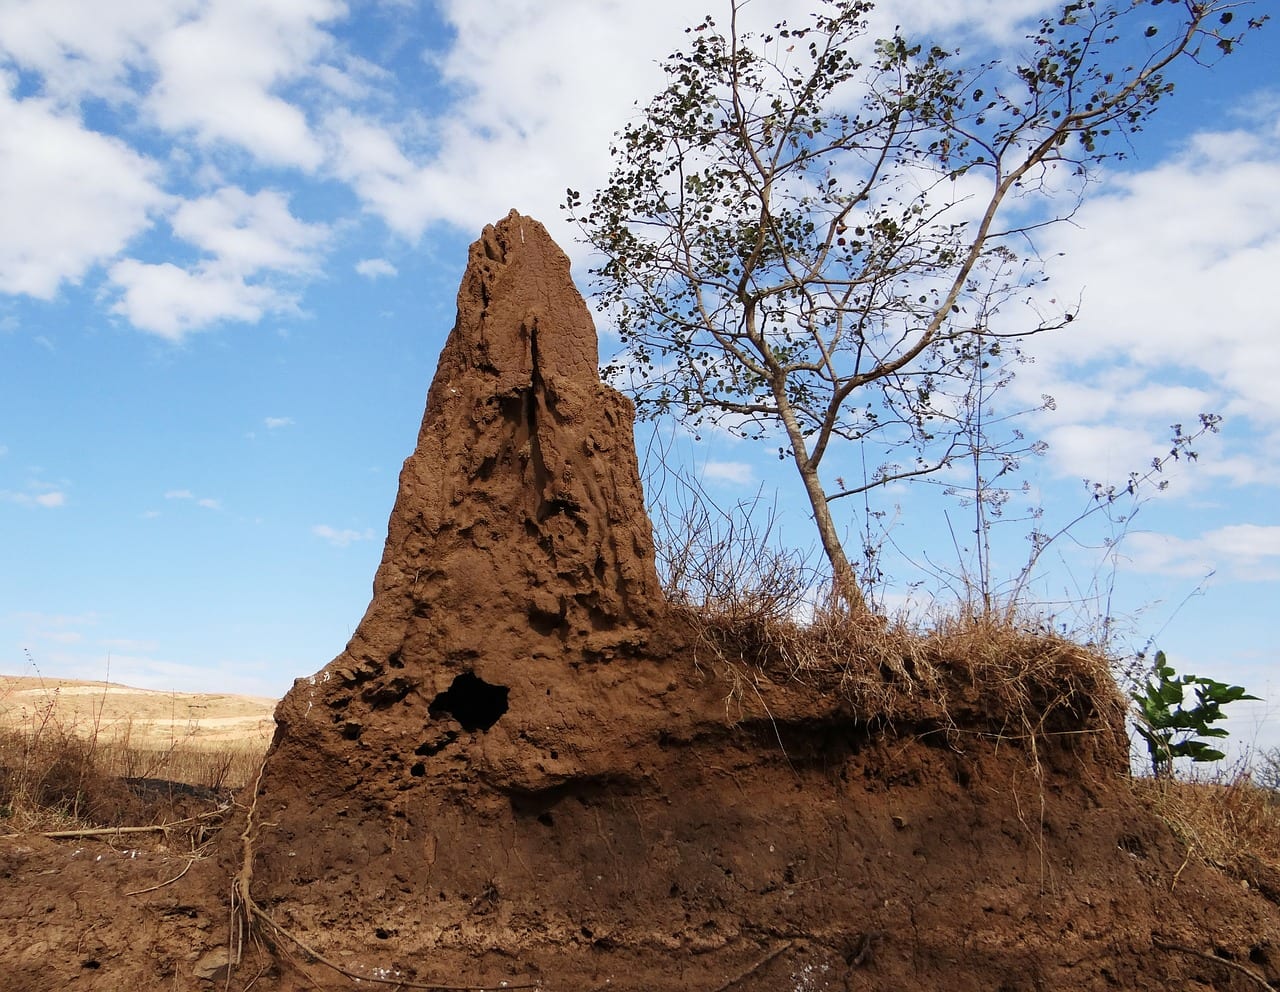 https://pixabay.com/en/termite-hill-termites-termite-mound-266587/